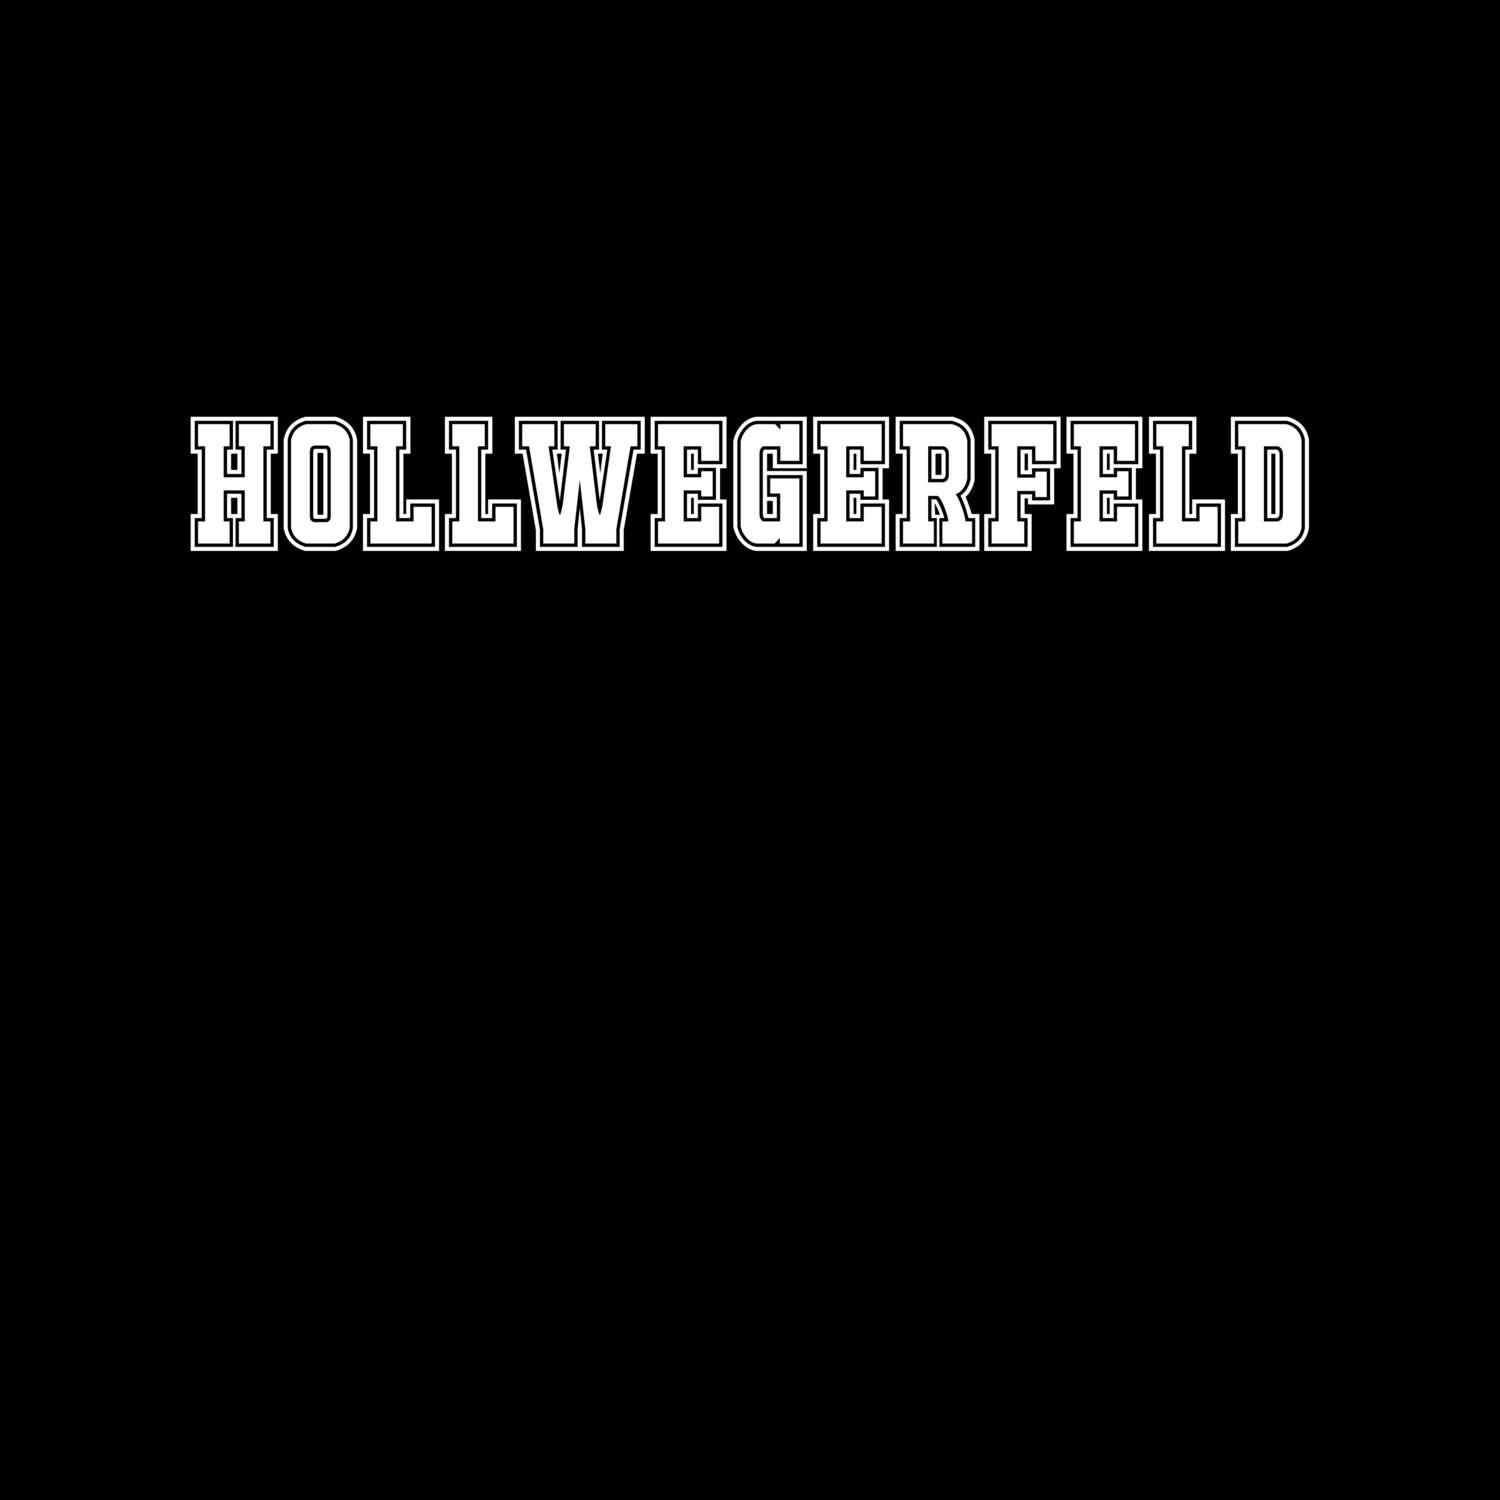 Hollwegerfeld T-Shirt »Classic«